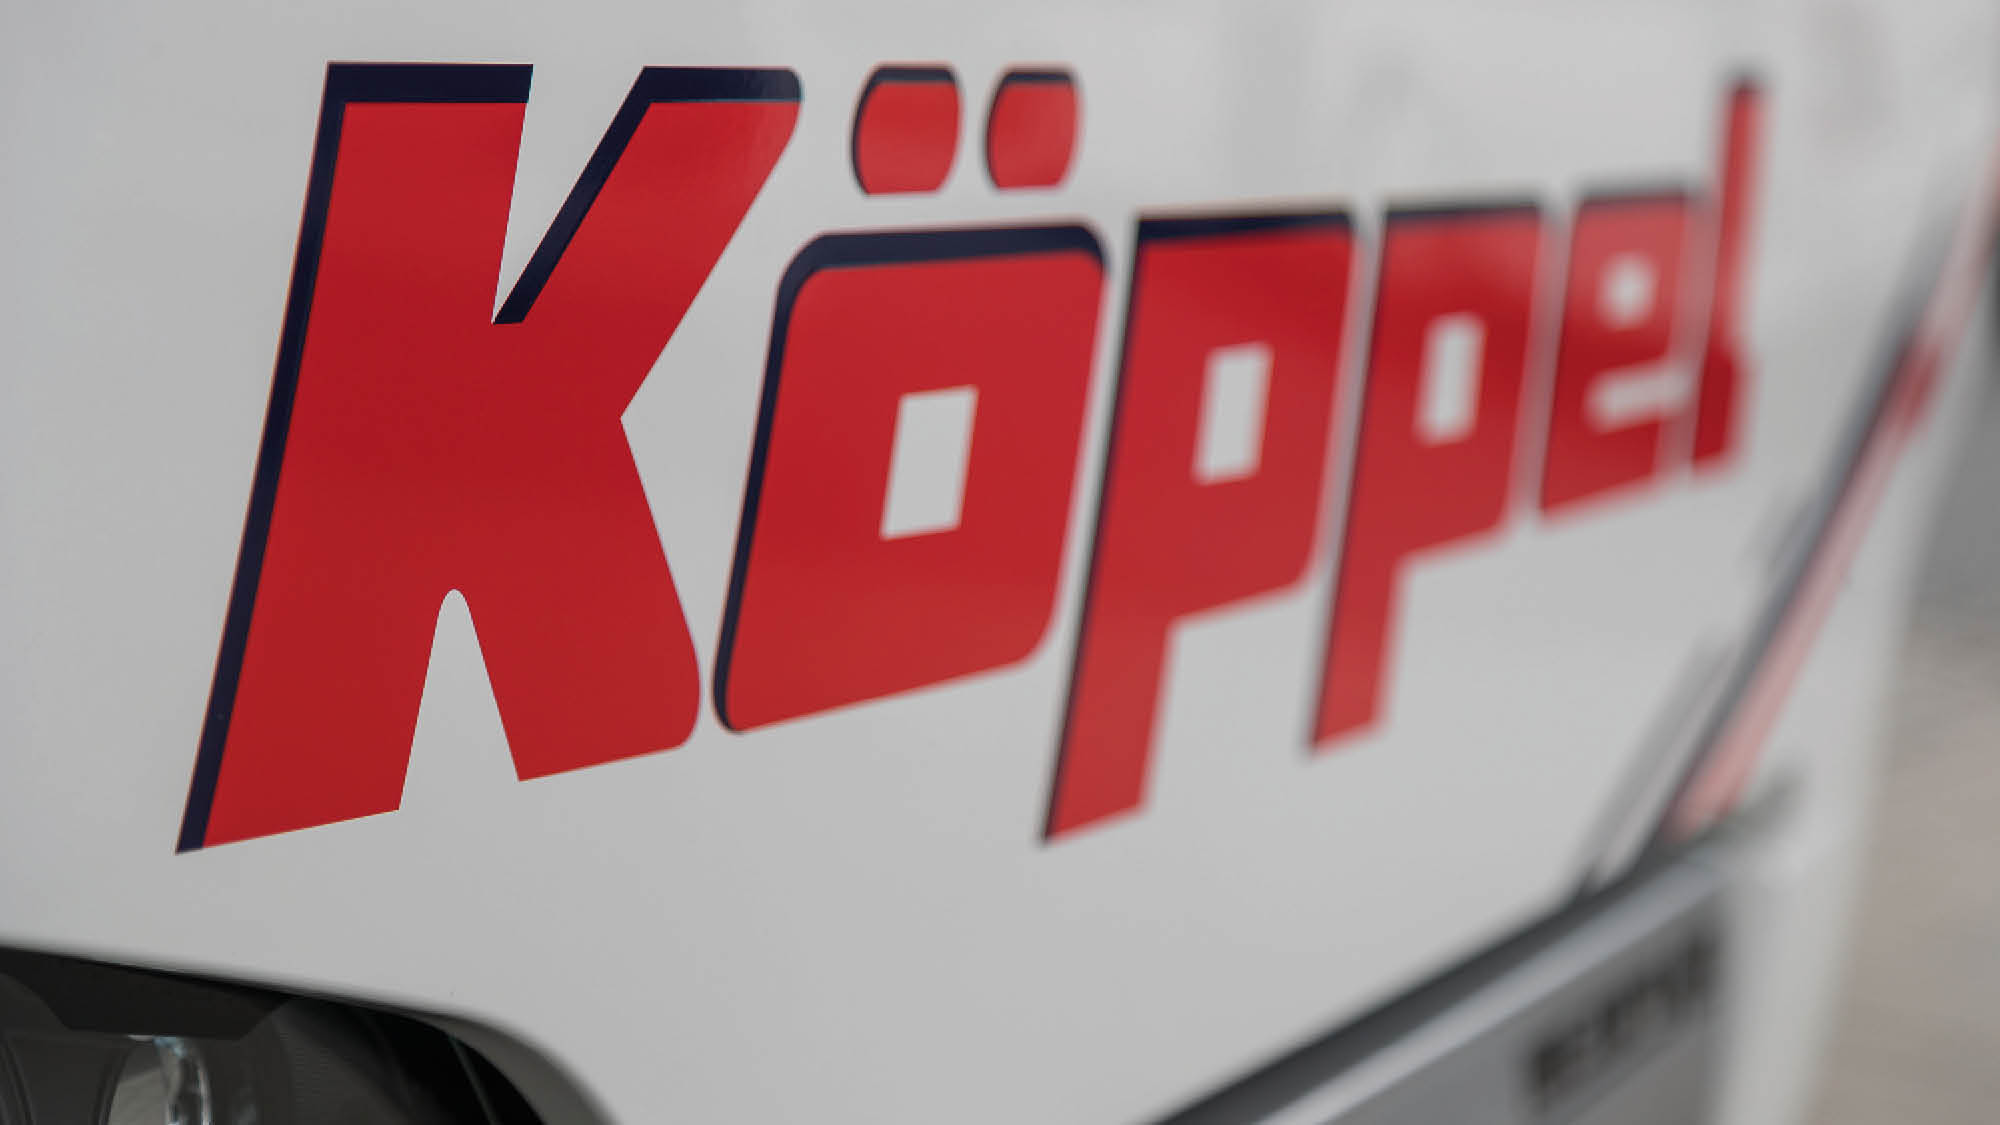 Köppel - Ellwangen - Website - Bus - 2019-12 - 05